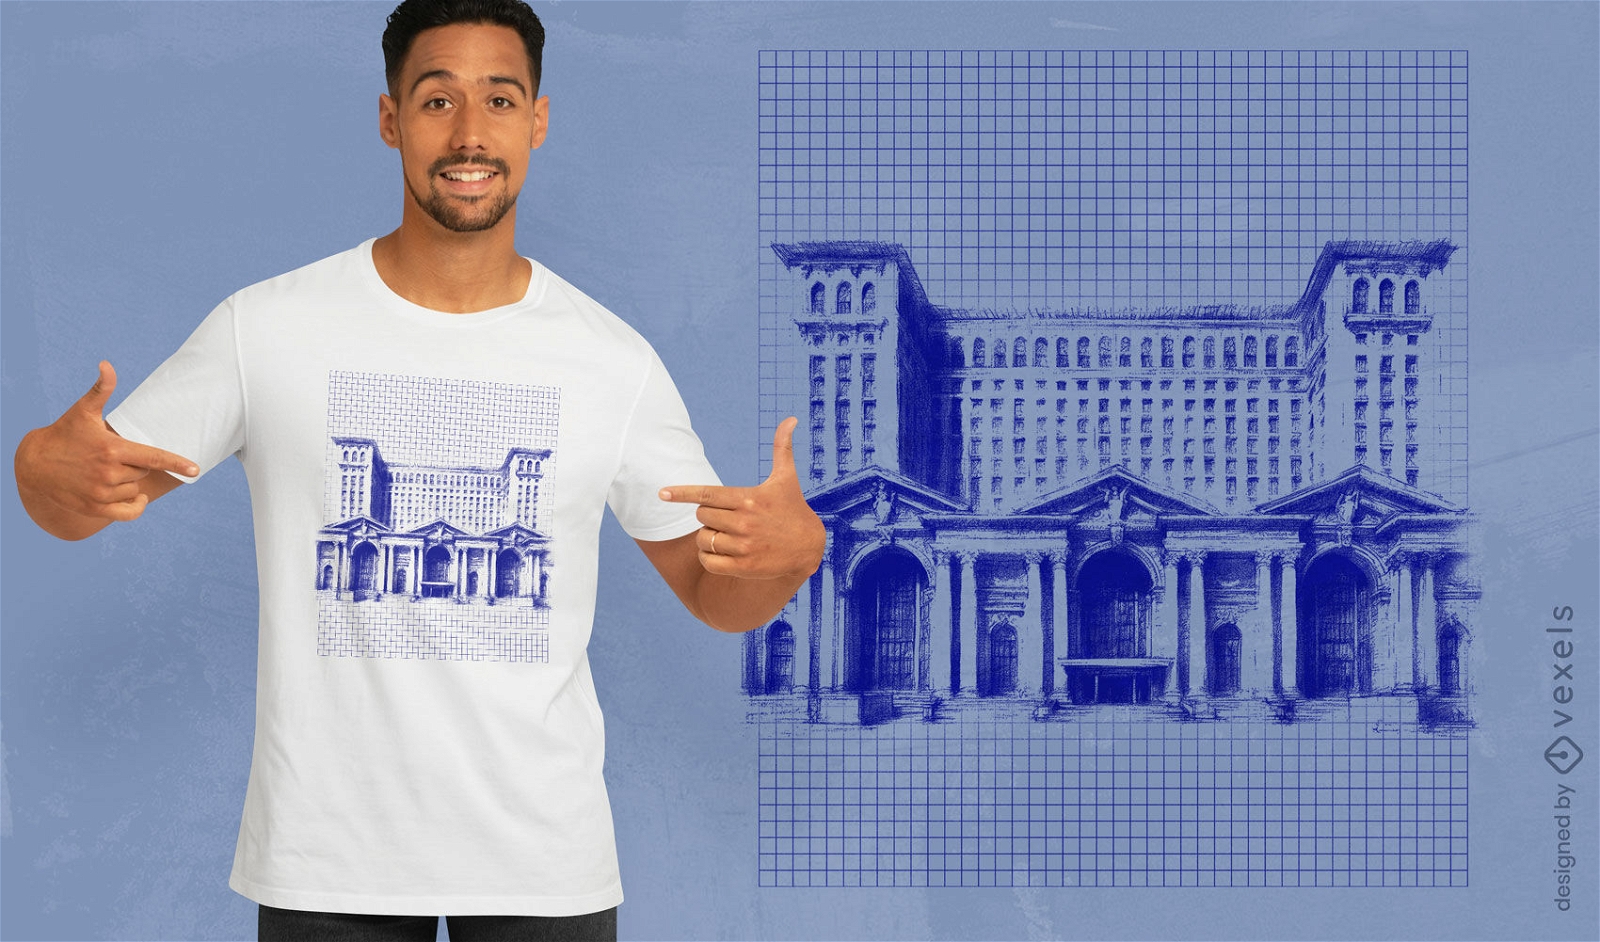 Detroit train station blueprint t-shirt design